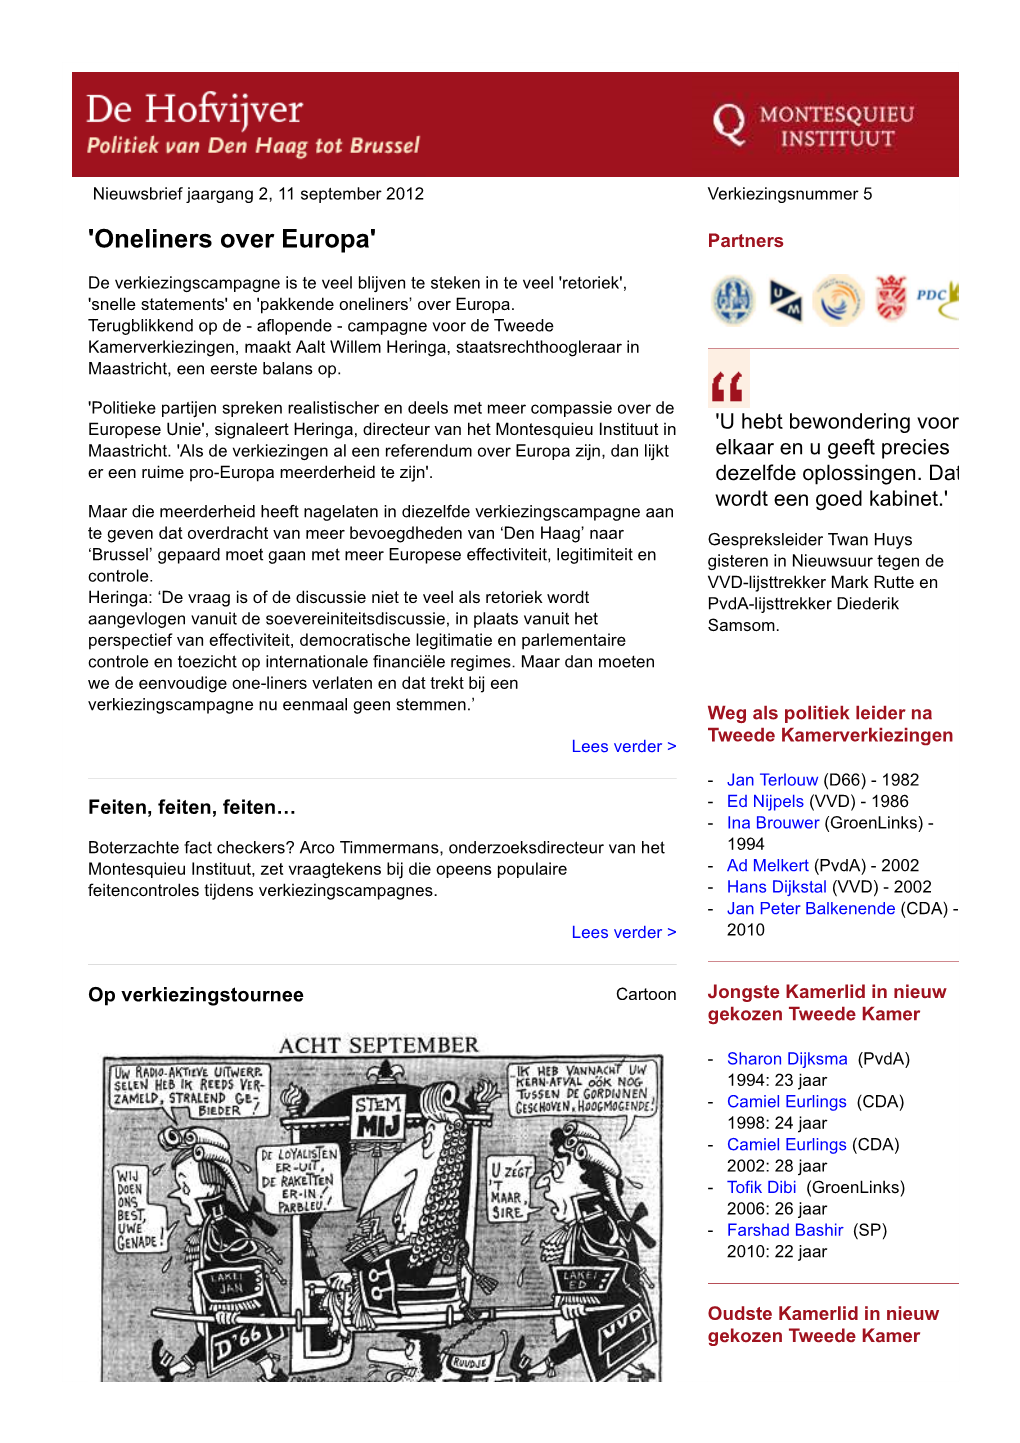 Nieuwsbrief De Hofvijver, 11 September 2012